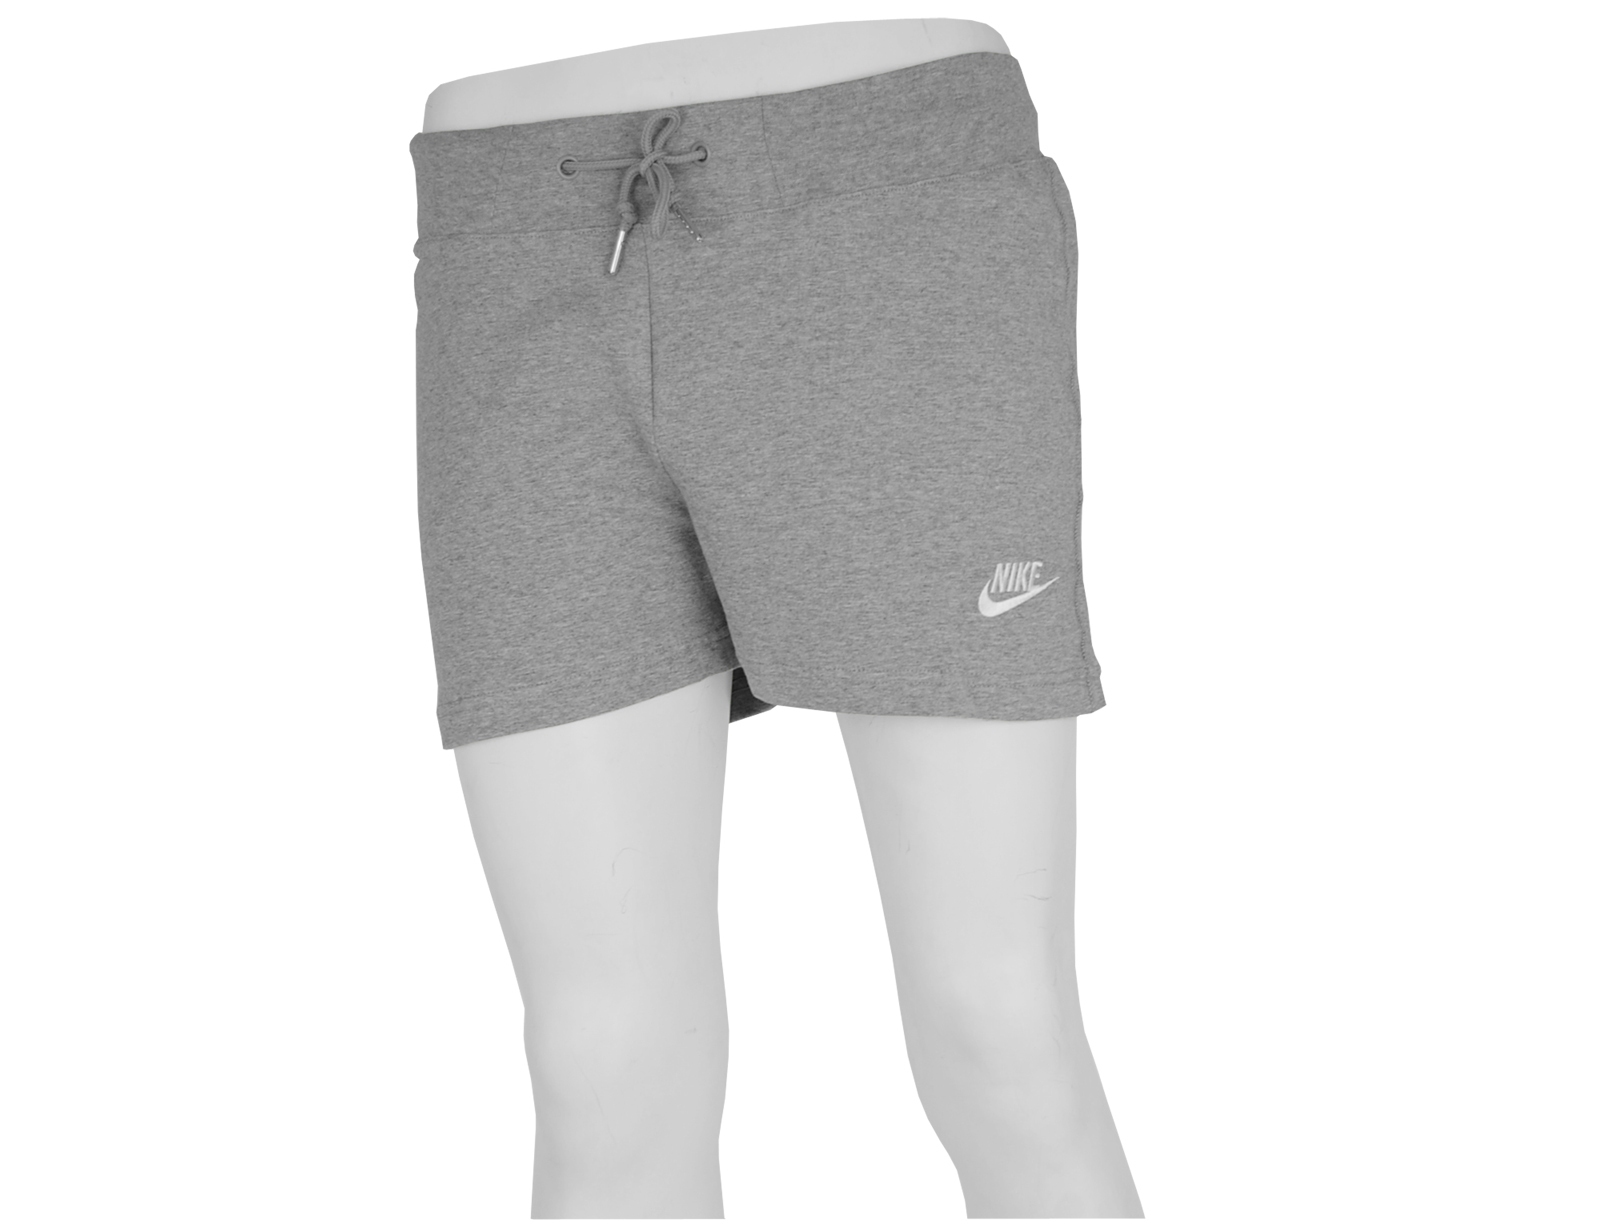 Avantisport - Nike - Jersey Short - Nike Short